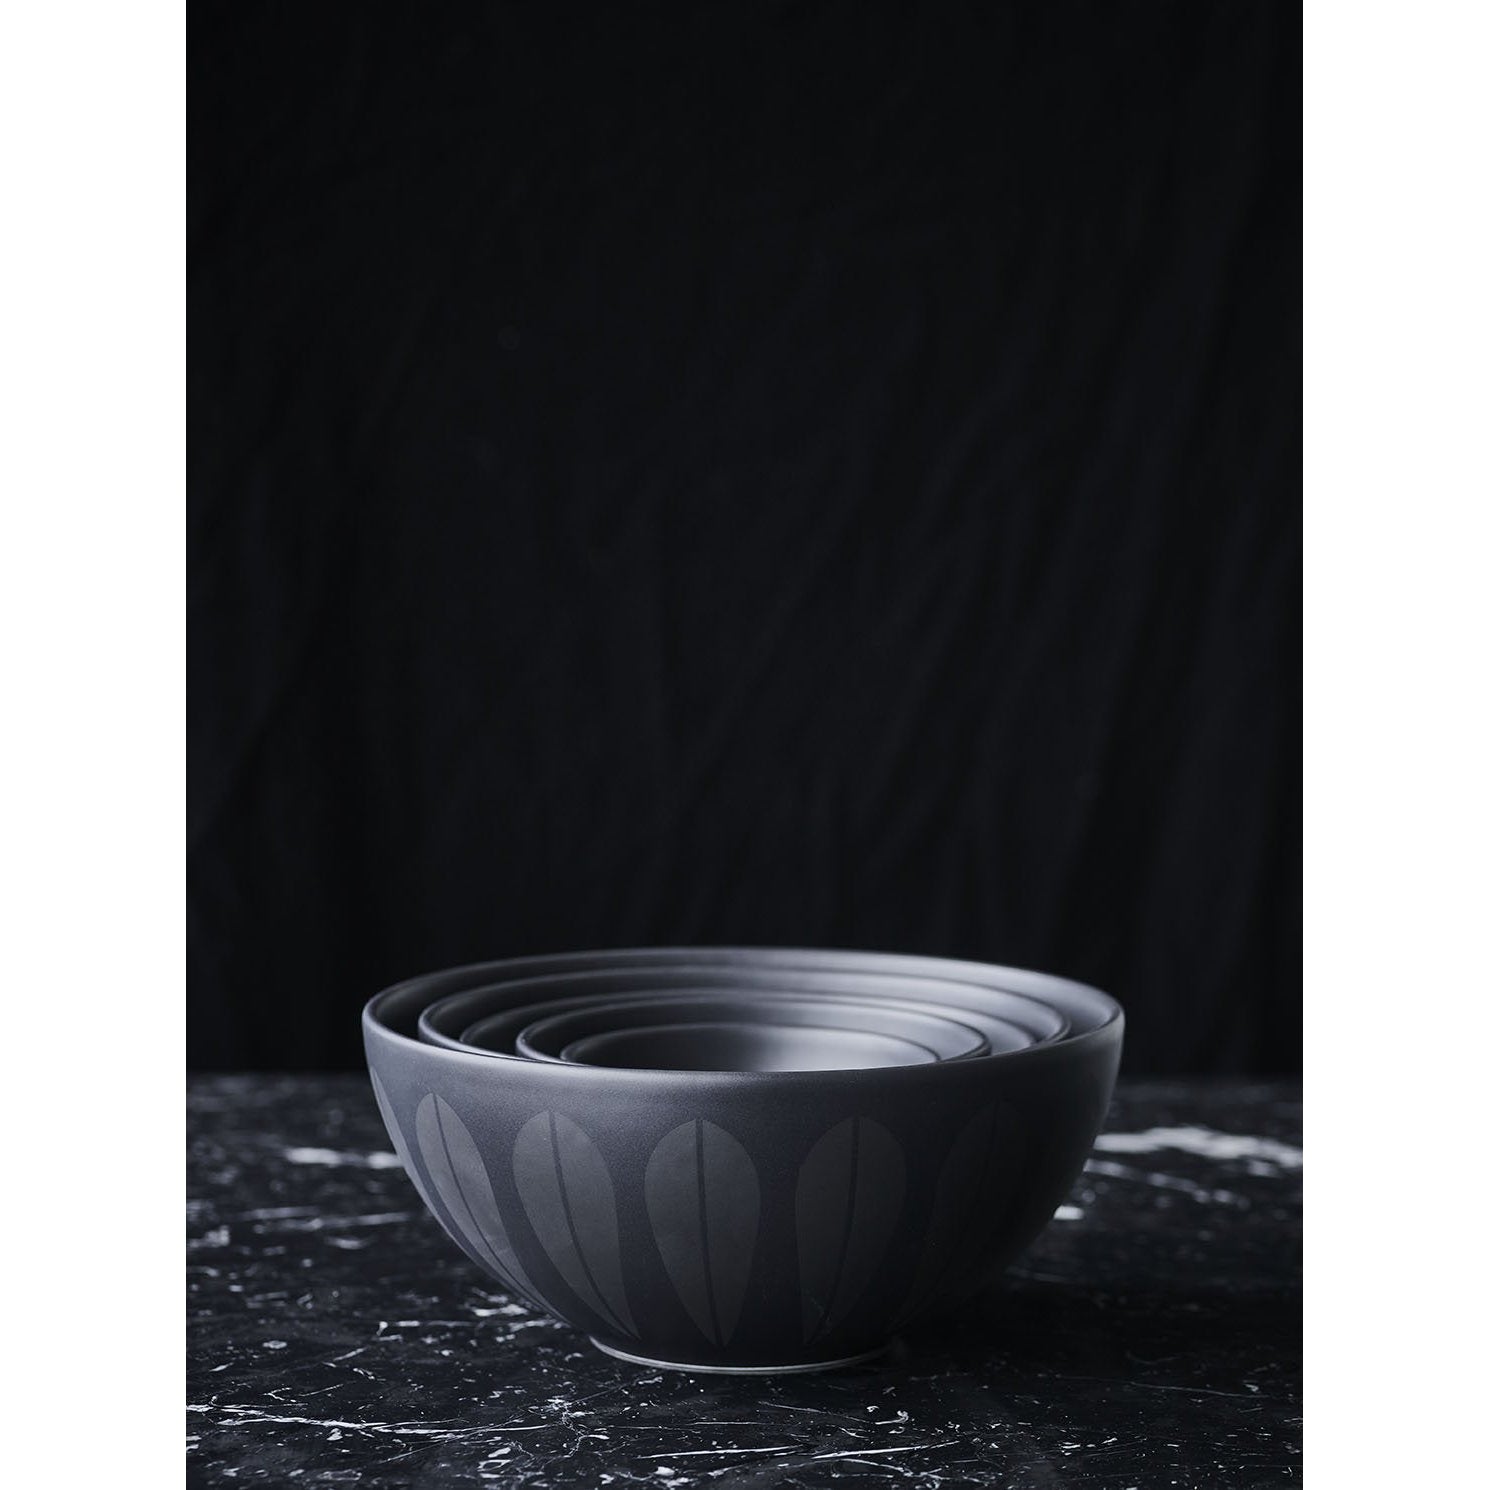 Lucie Kaas Arne Clausen Bowl Black，12厘米